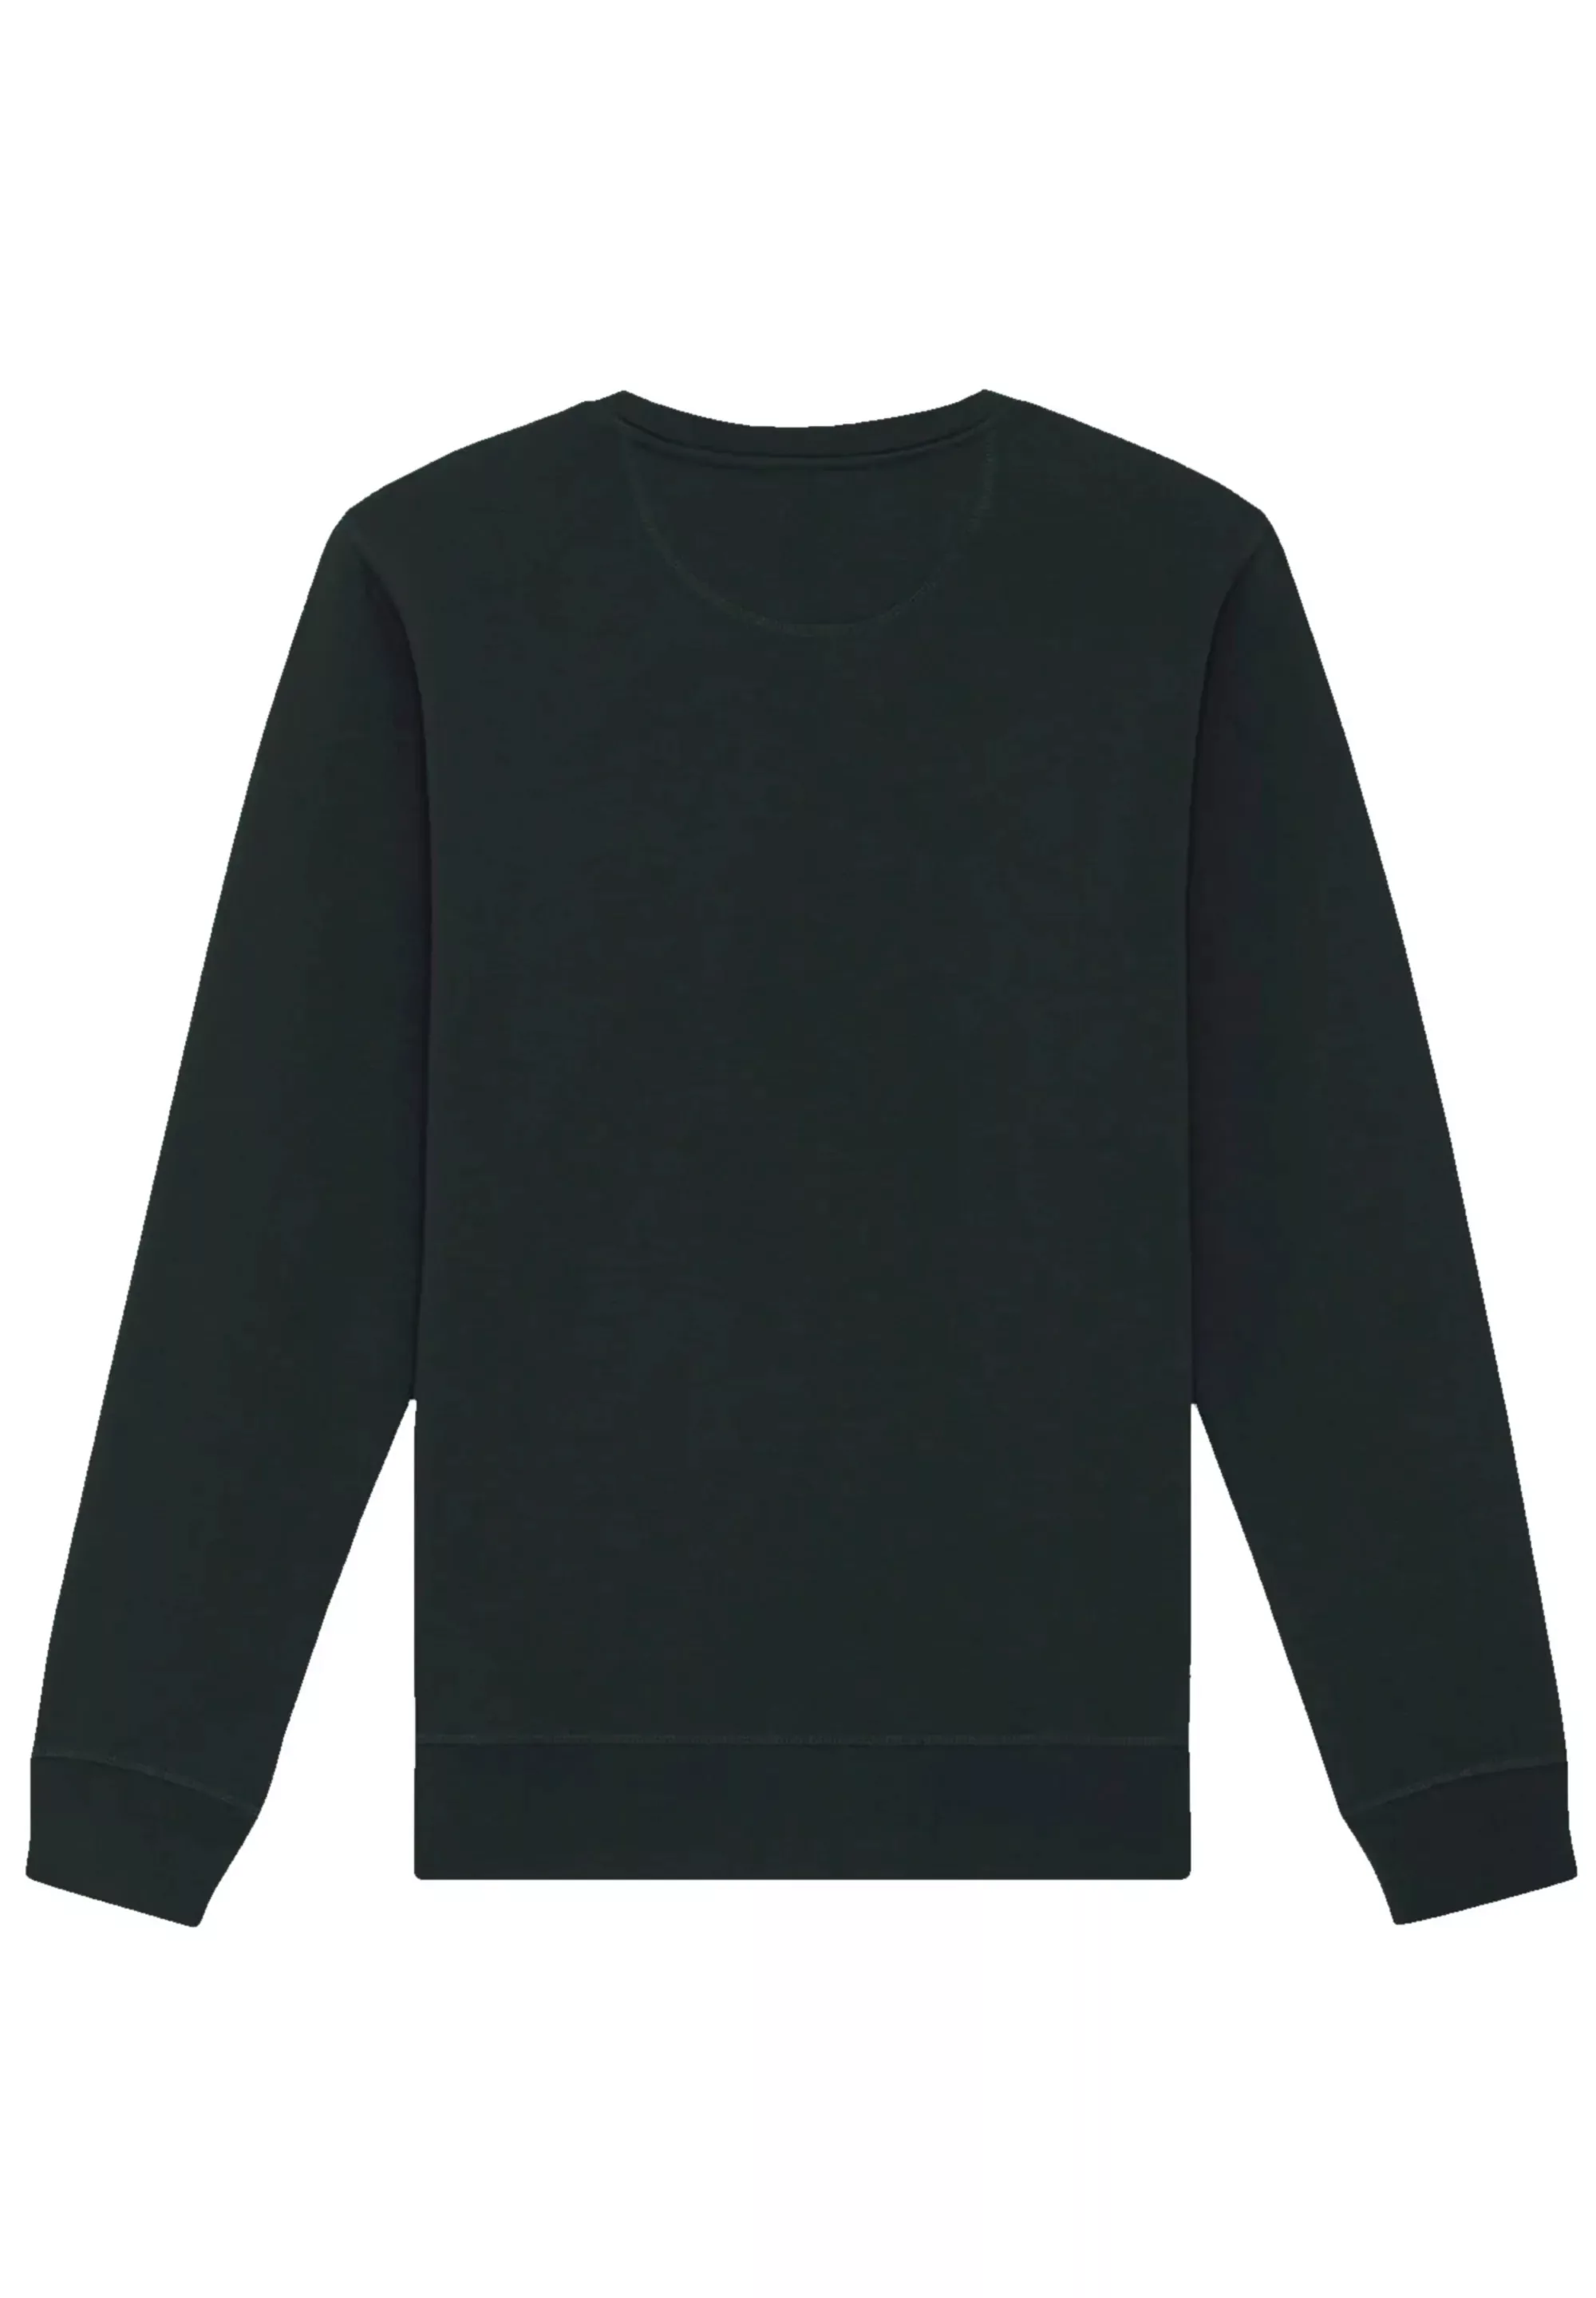 F4NT4STIC Sweatshirt "Downtown LA" günstig online kaufen